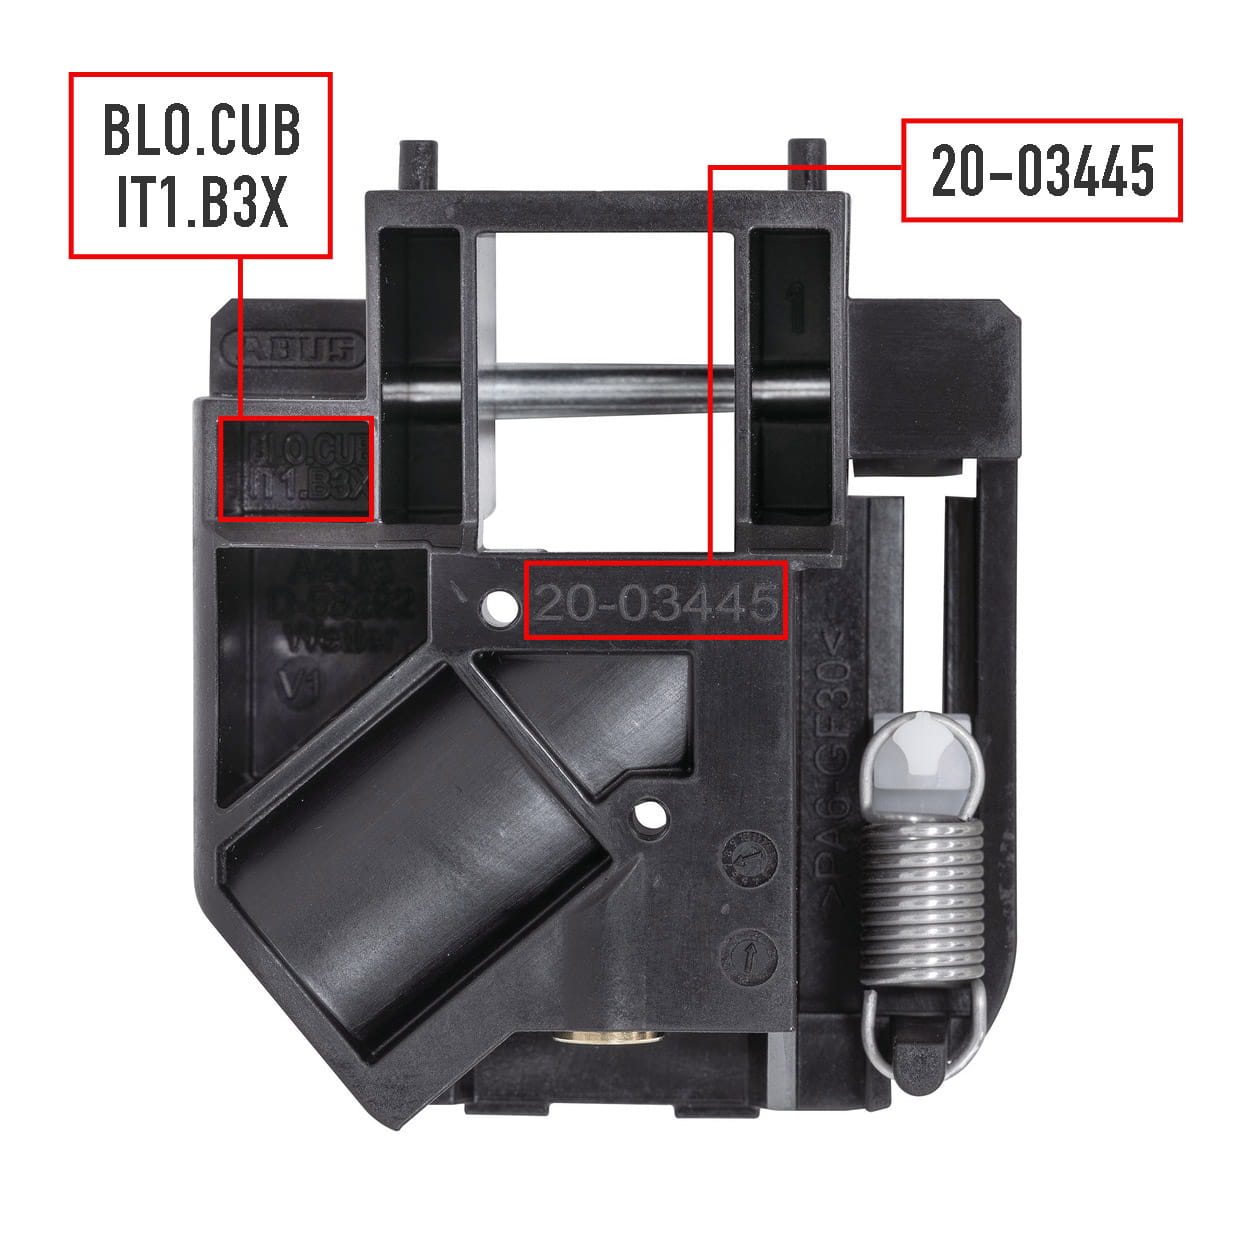 ABUS Cube Battery Mount BLO CUB IT1.B3X Bracket 20-03445